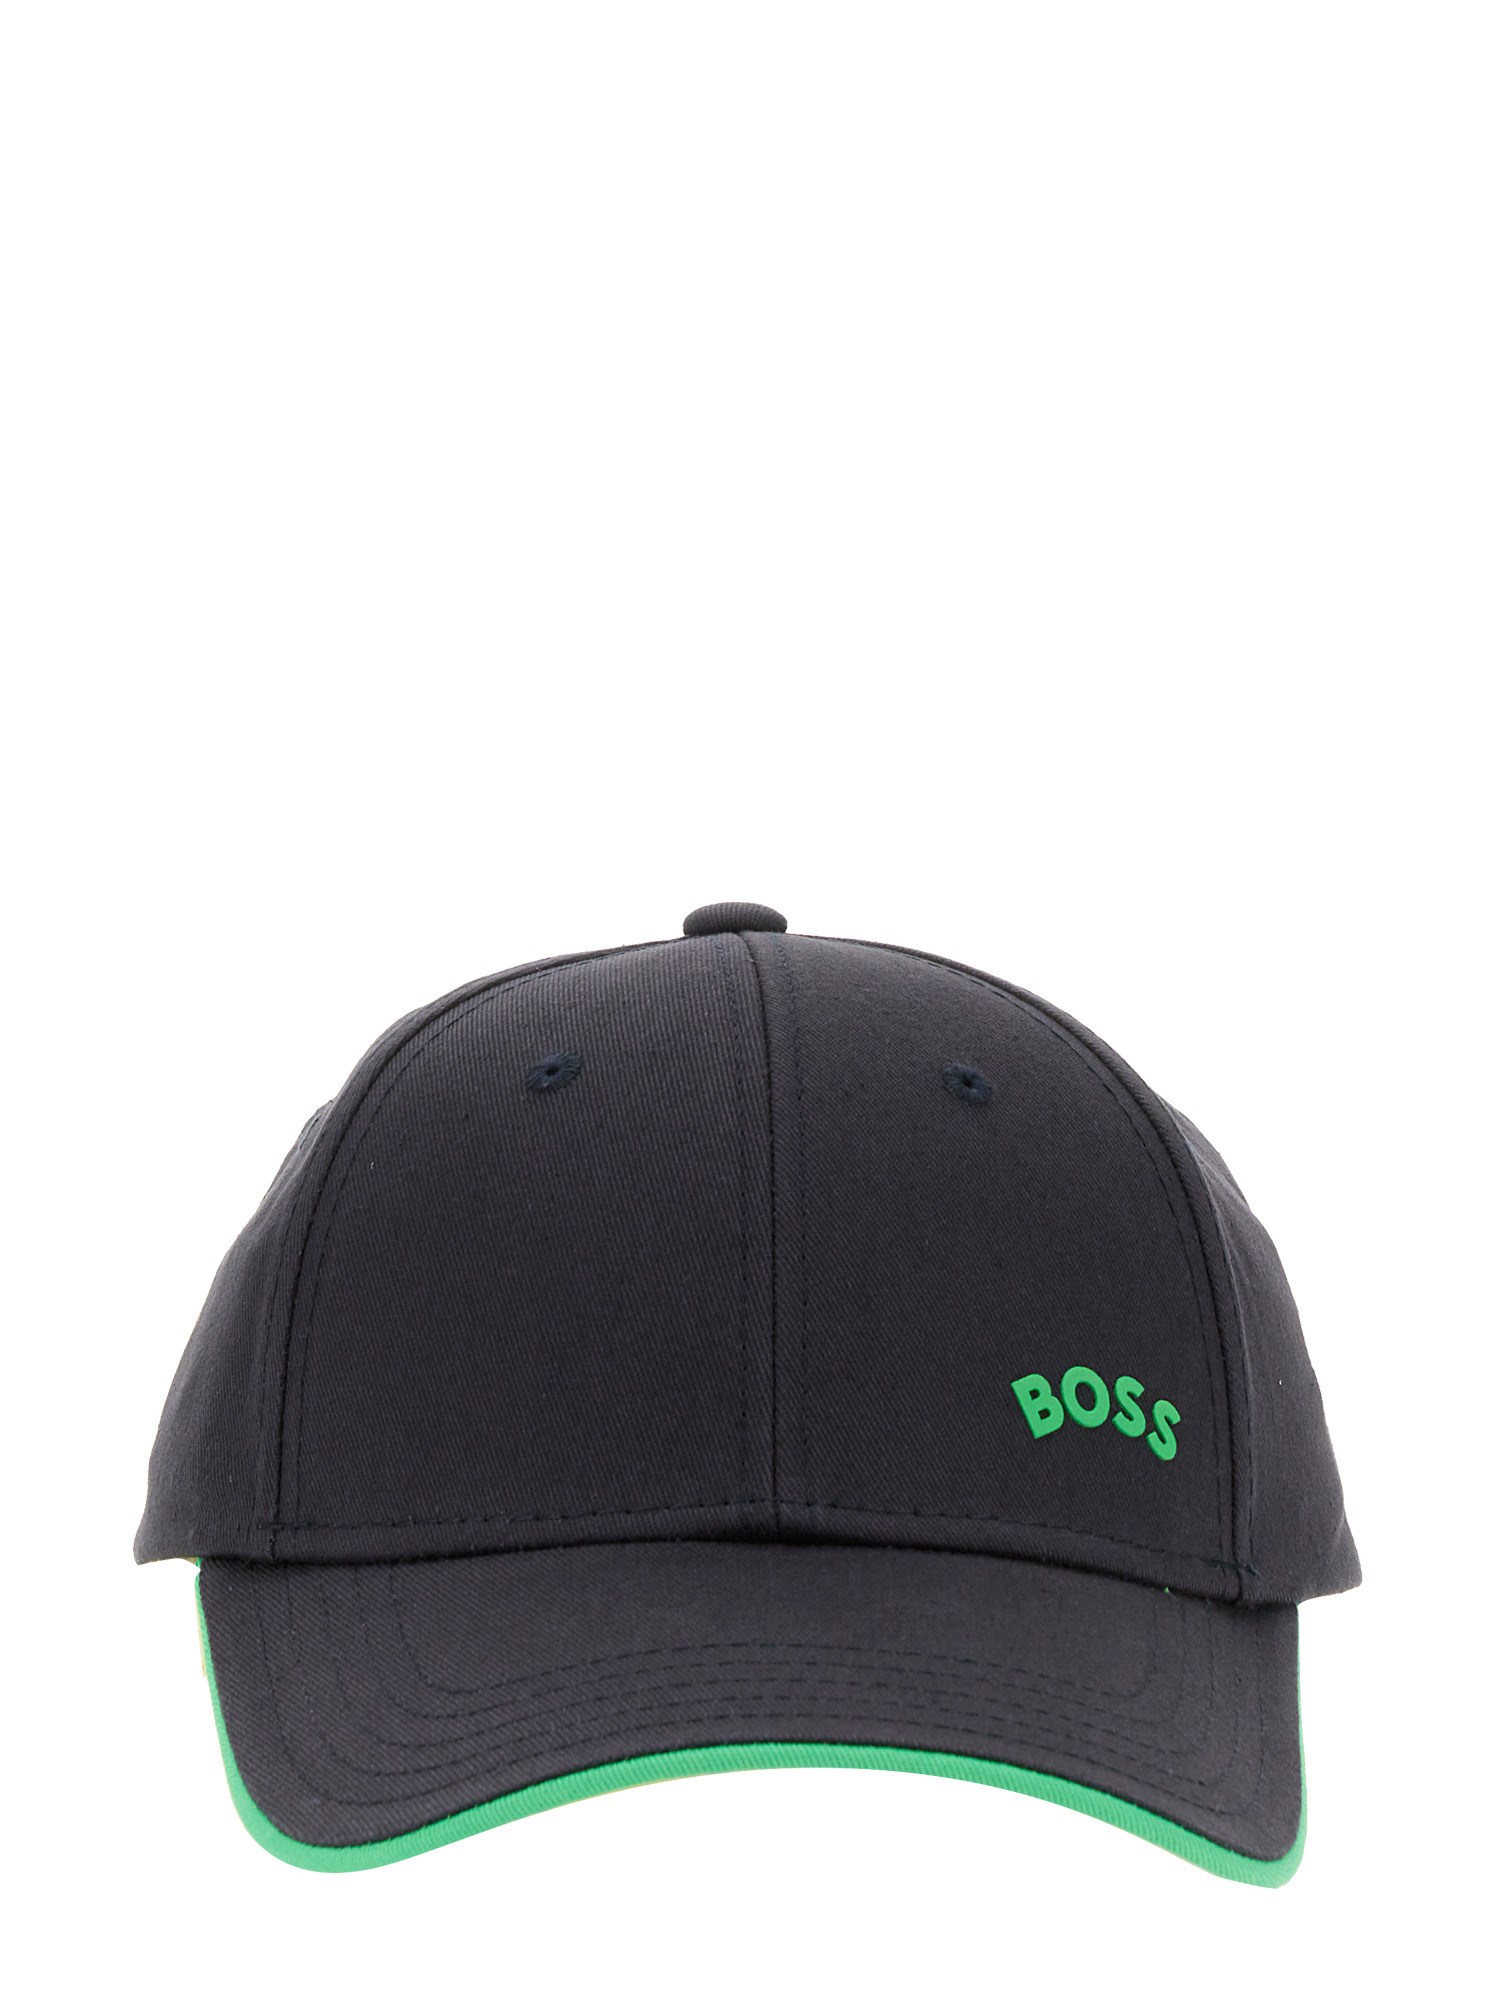 BOSS boss baseball hat with logo